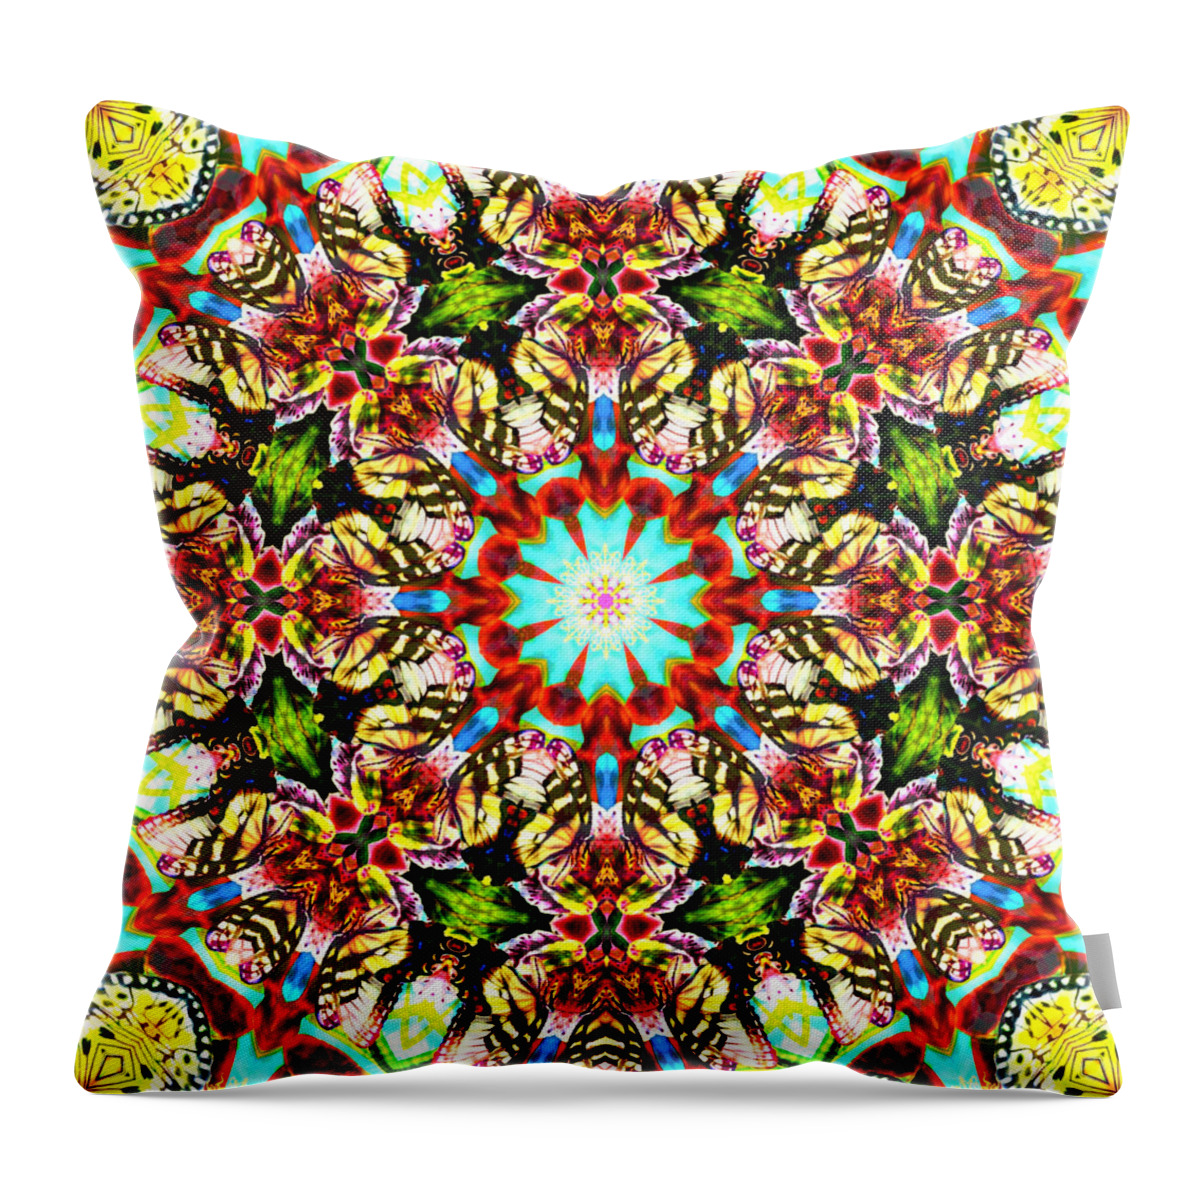 Kaleidoscope Throw Pillow featuring the digital art Butterfly Ball No 4 by Charmaine Zoe